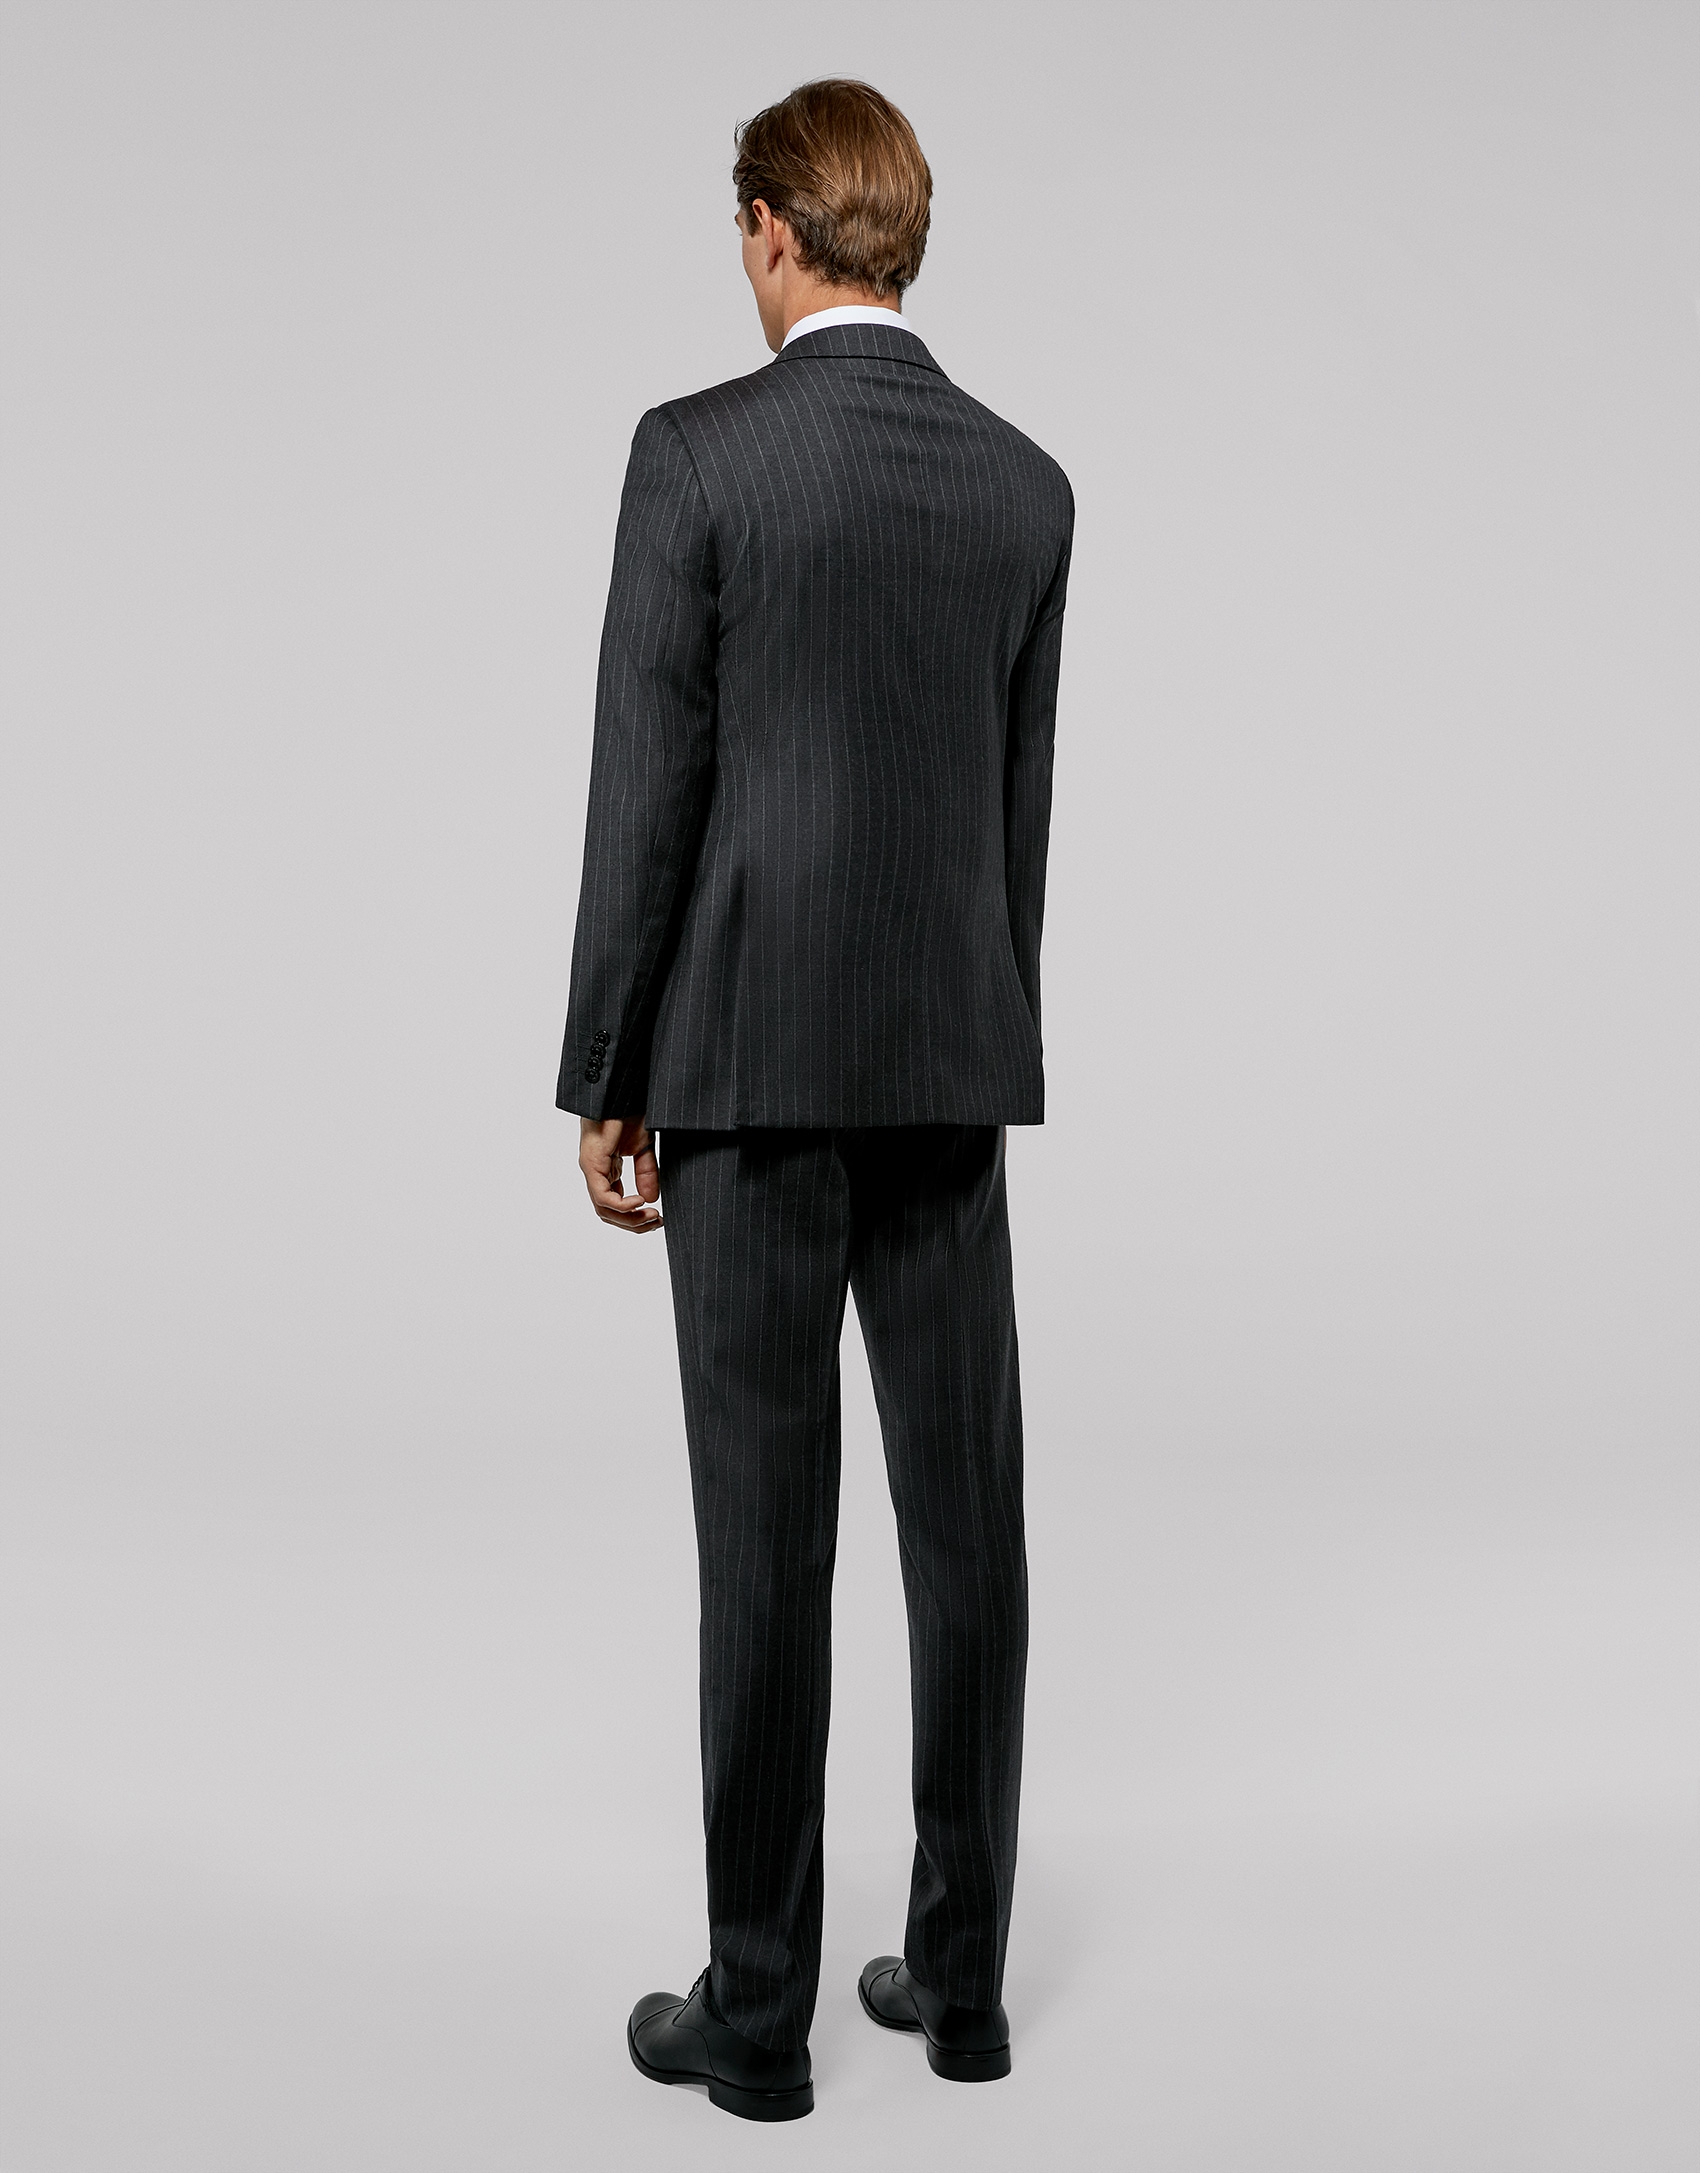 dillards mens 2 piece gray pinstriped suit